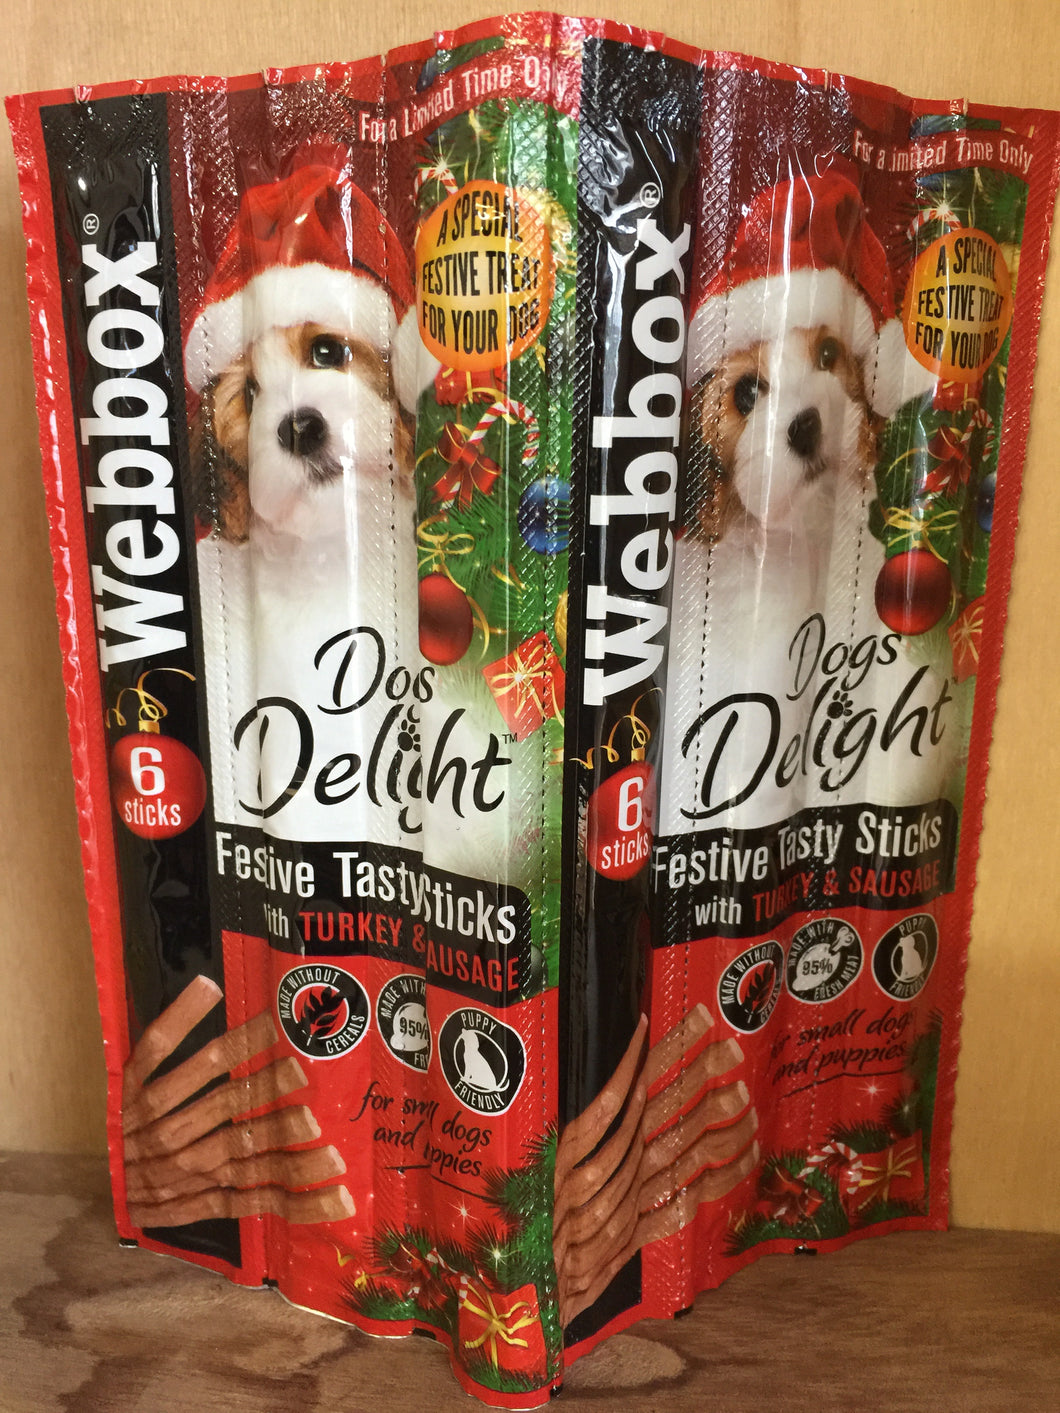 Webbox Festive Turkey and Sausage Dog Treats 6 Sticks 30g